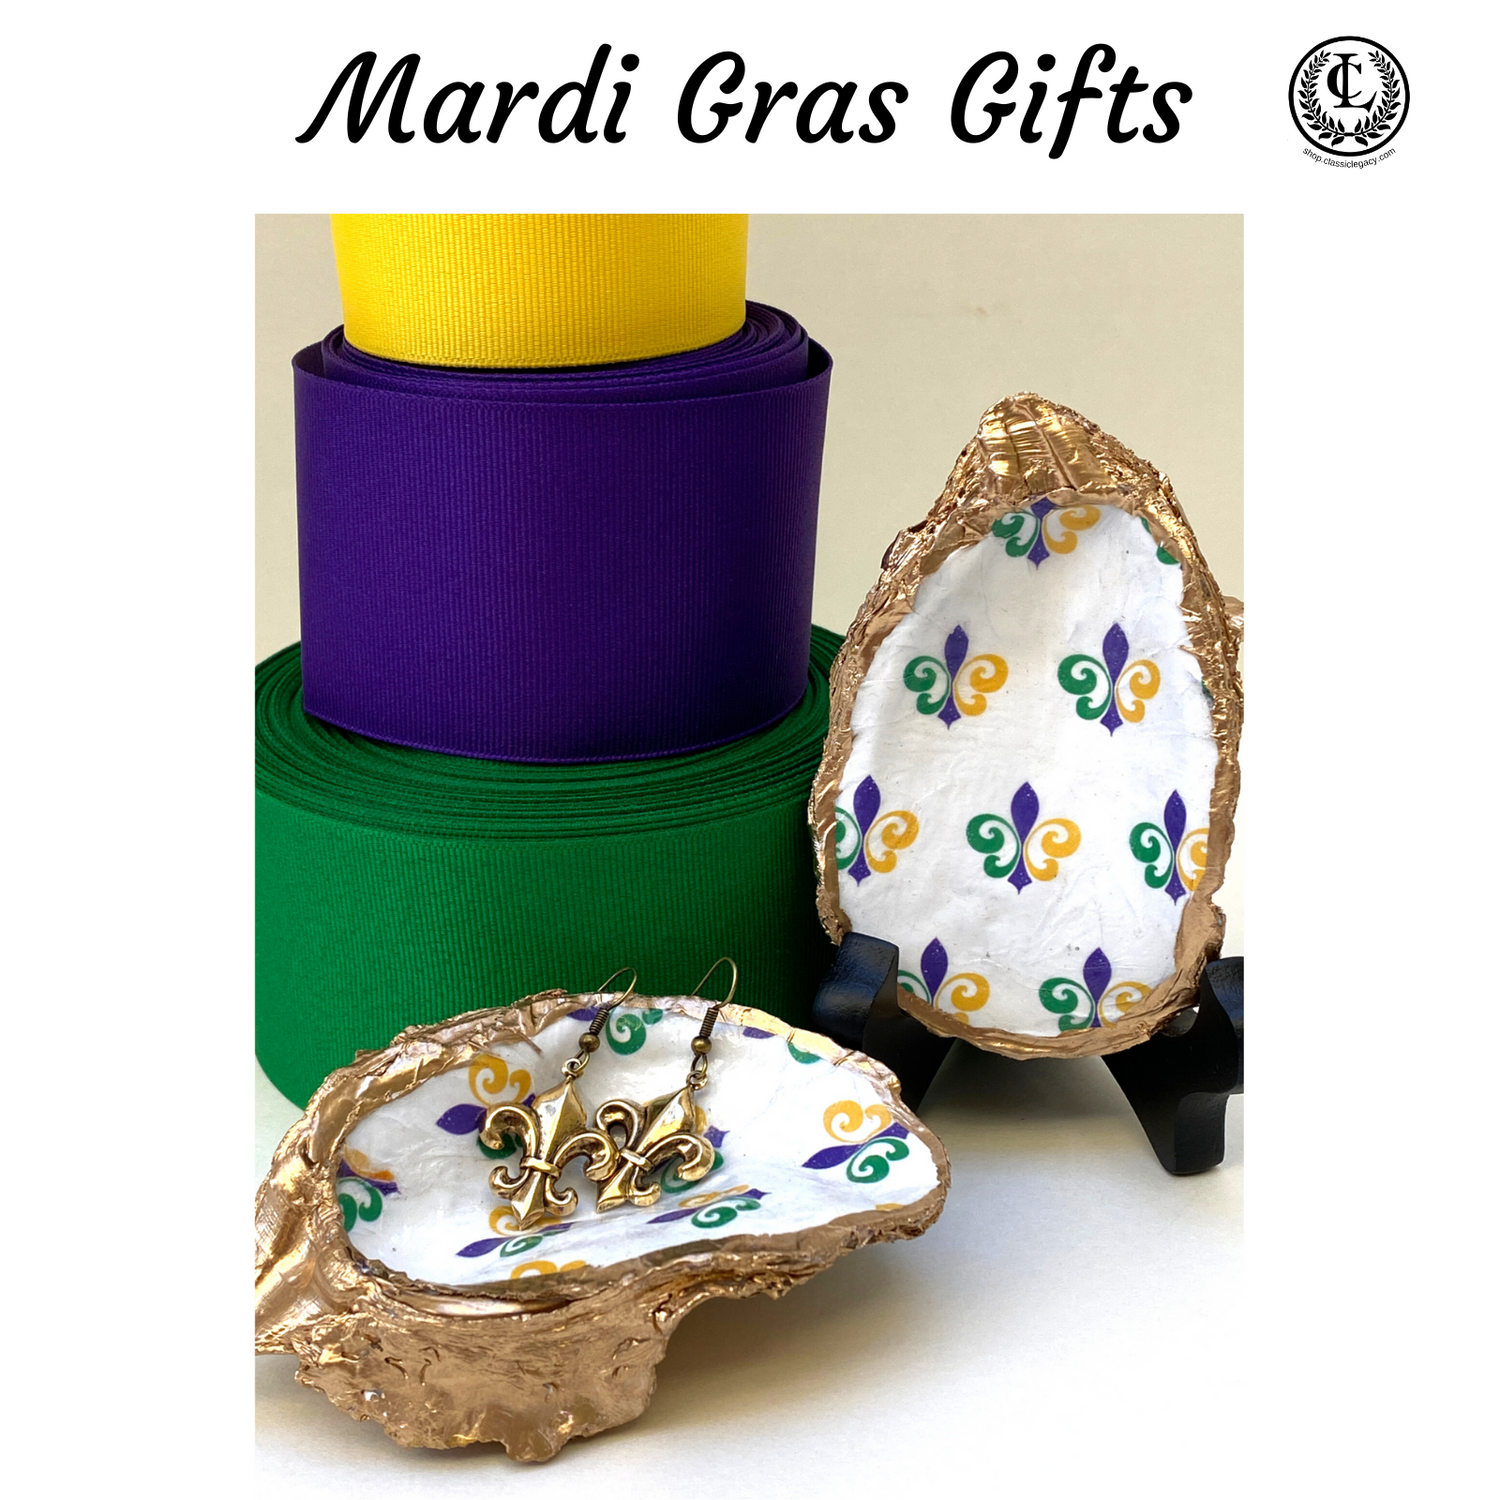 Mardi Gras Gifts